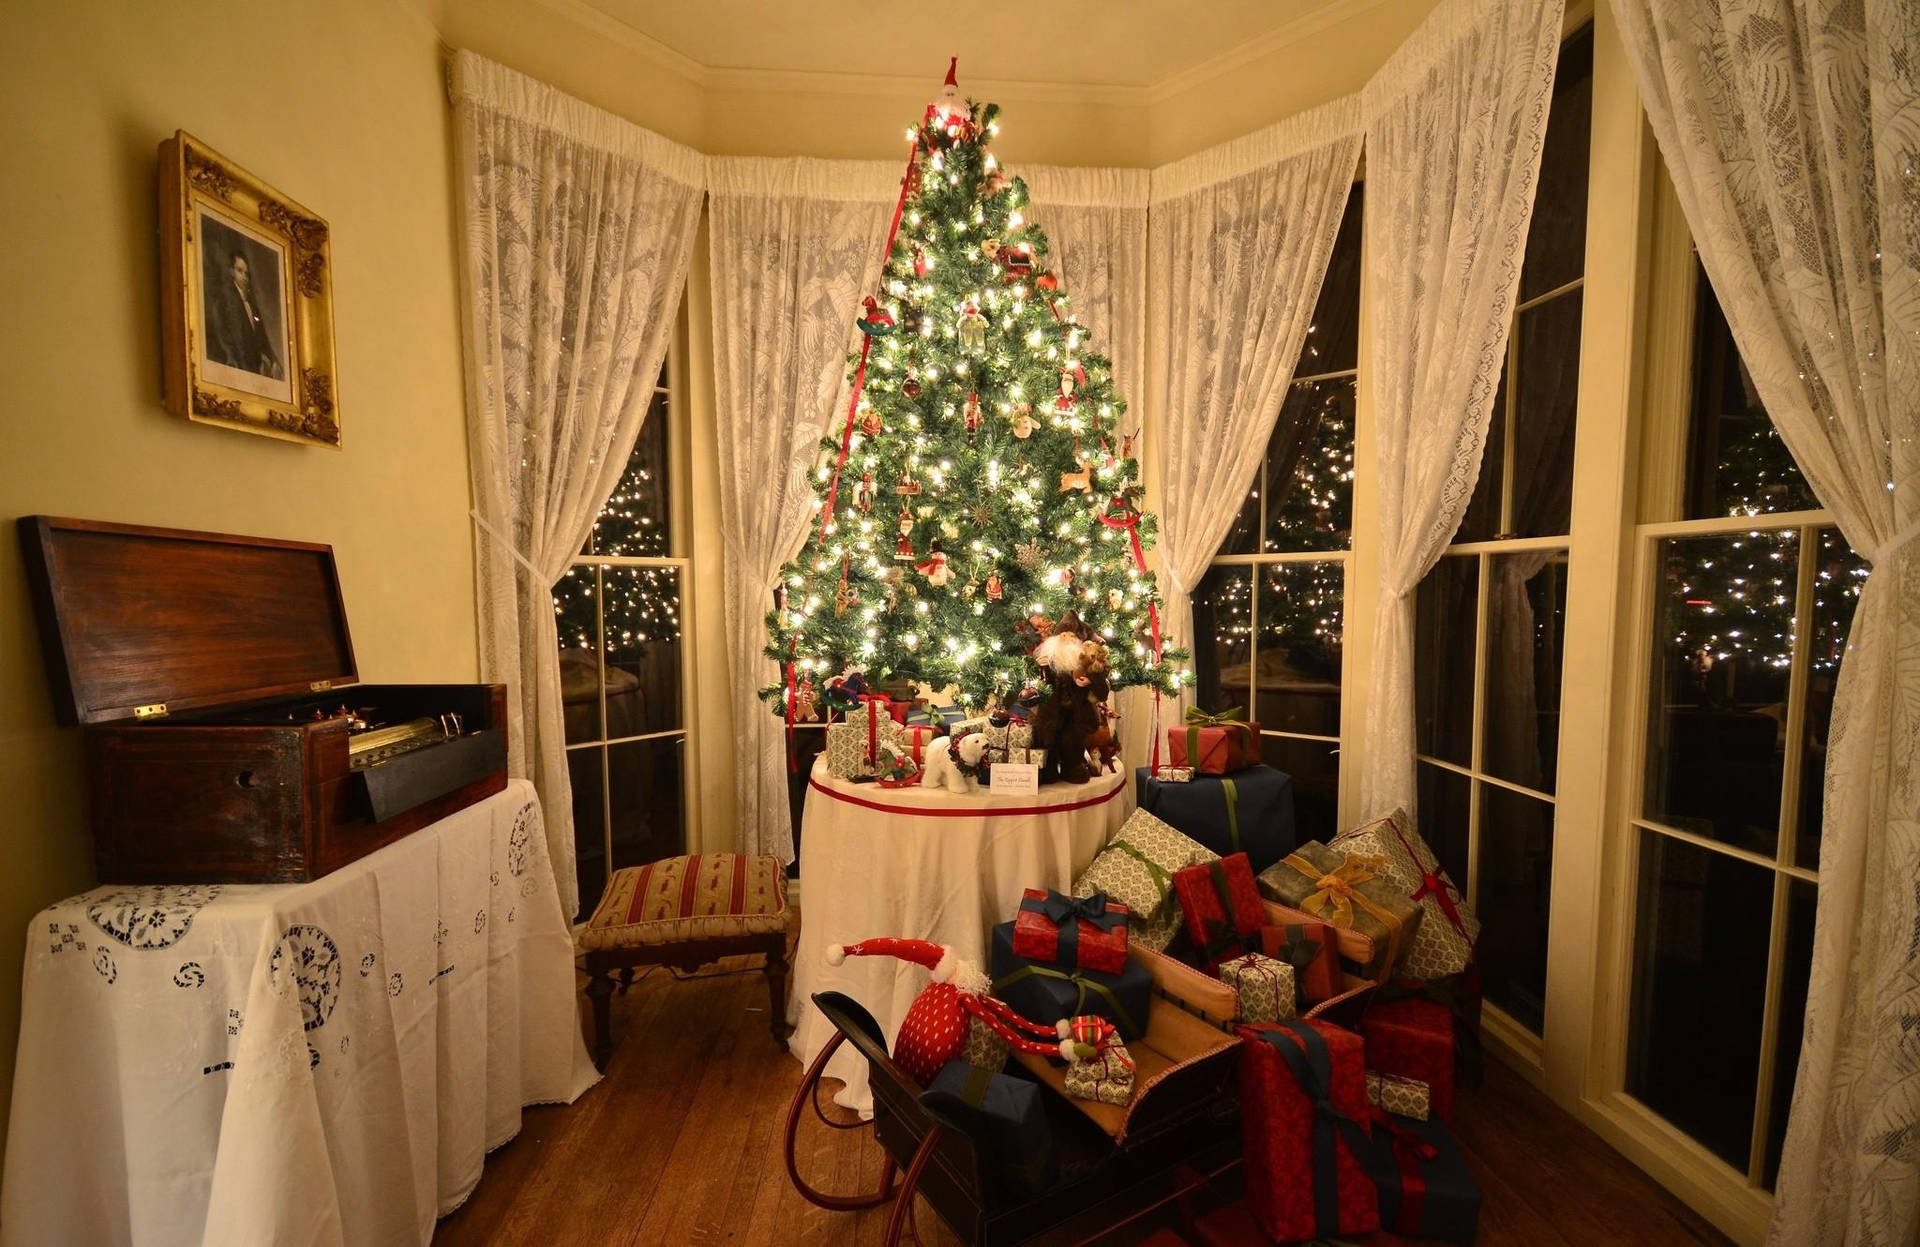 Decorated Tree Christmas Lights